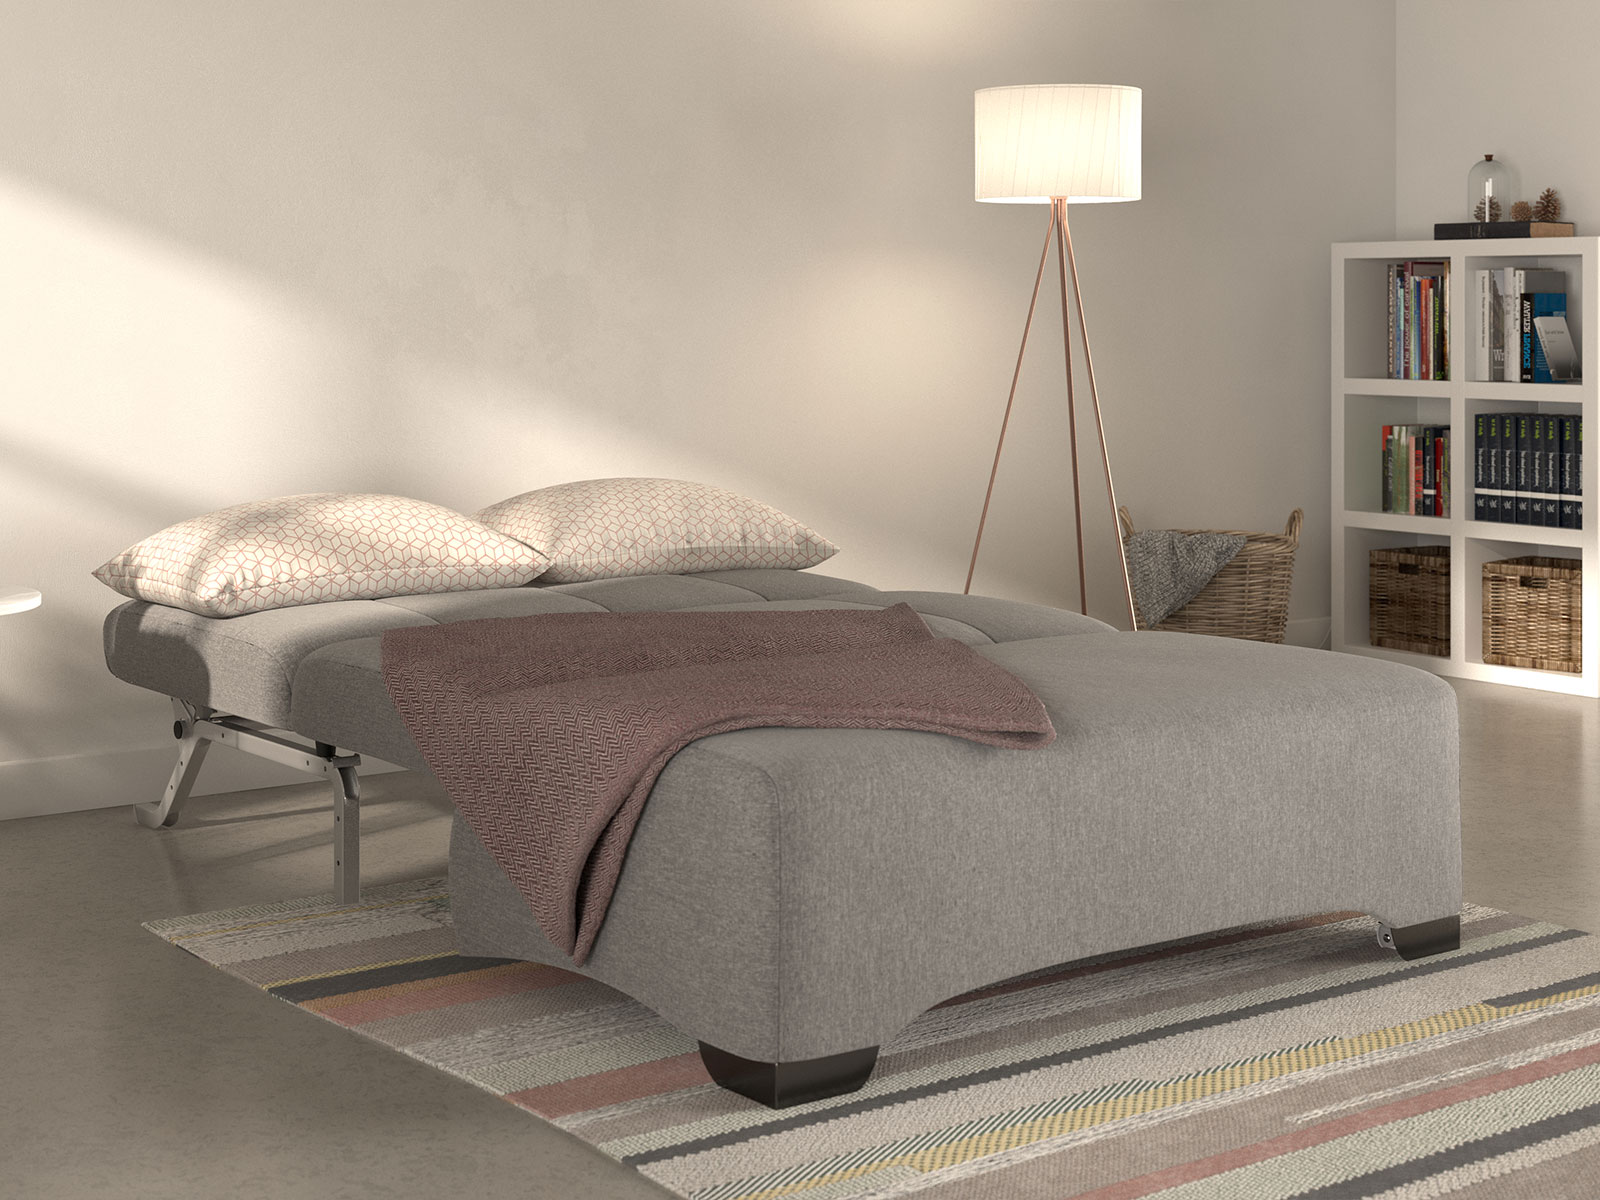 kyoto sofa bed instructions